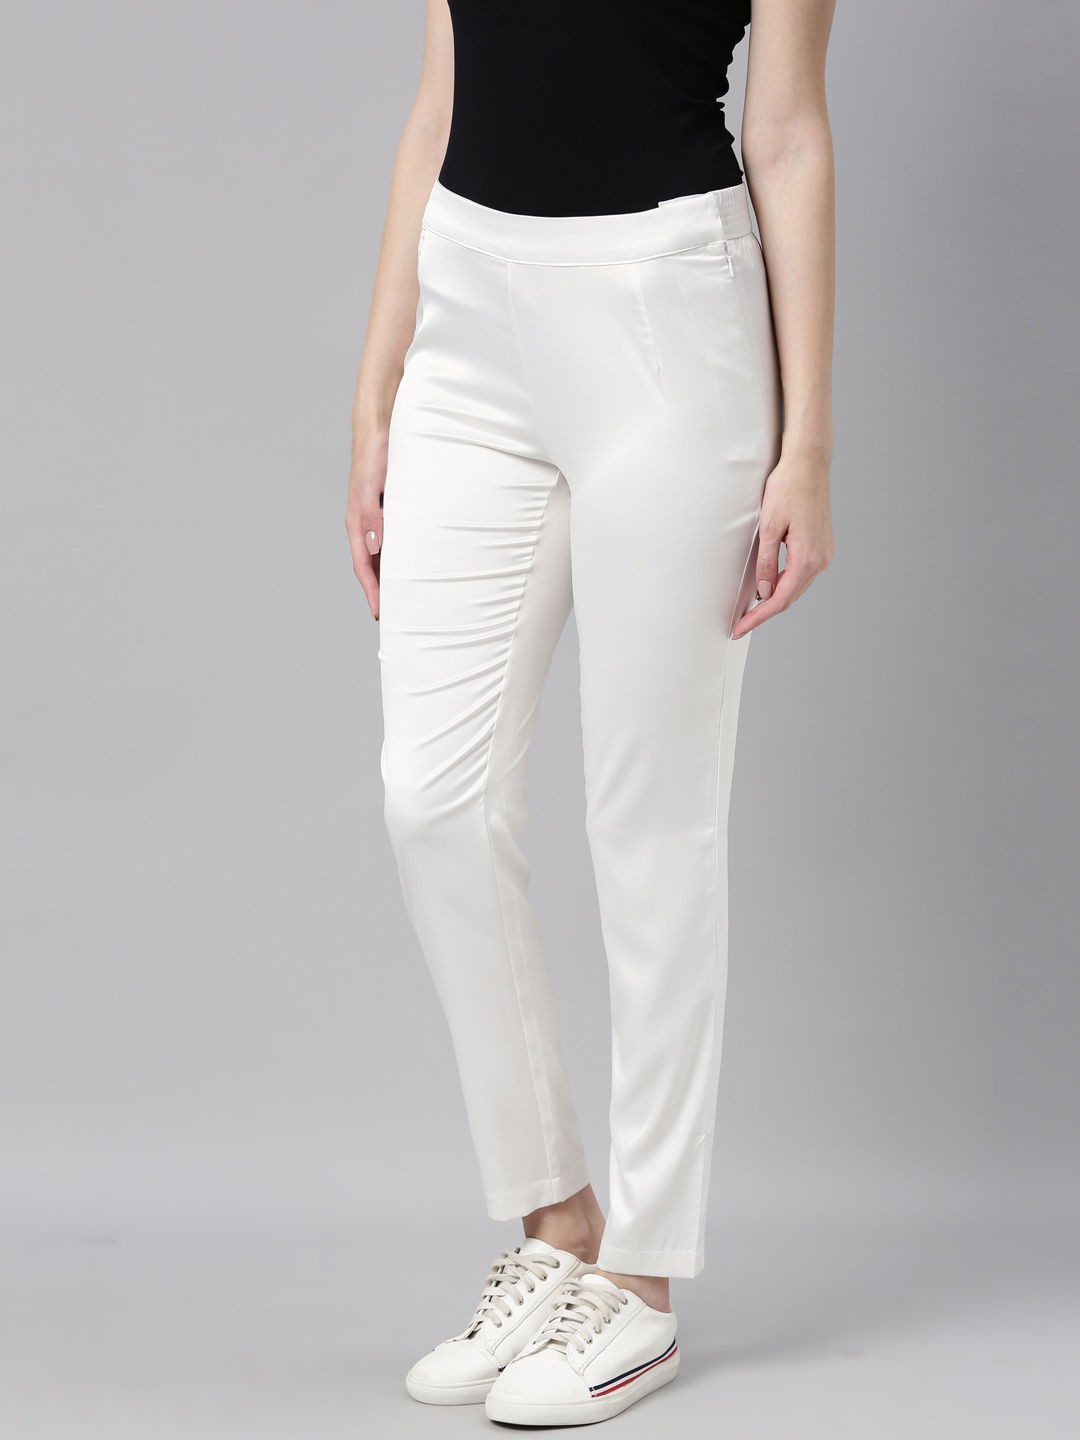 namrita prints Regular Fit Women White Trousers - Buy namrita prints  Regular Fit Women White Trousers Online at Best Prices in India |  Flipkart.com